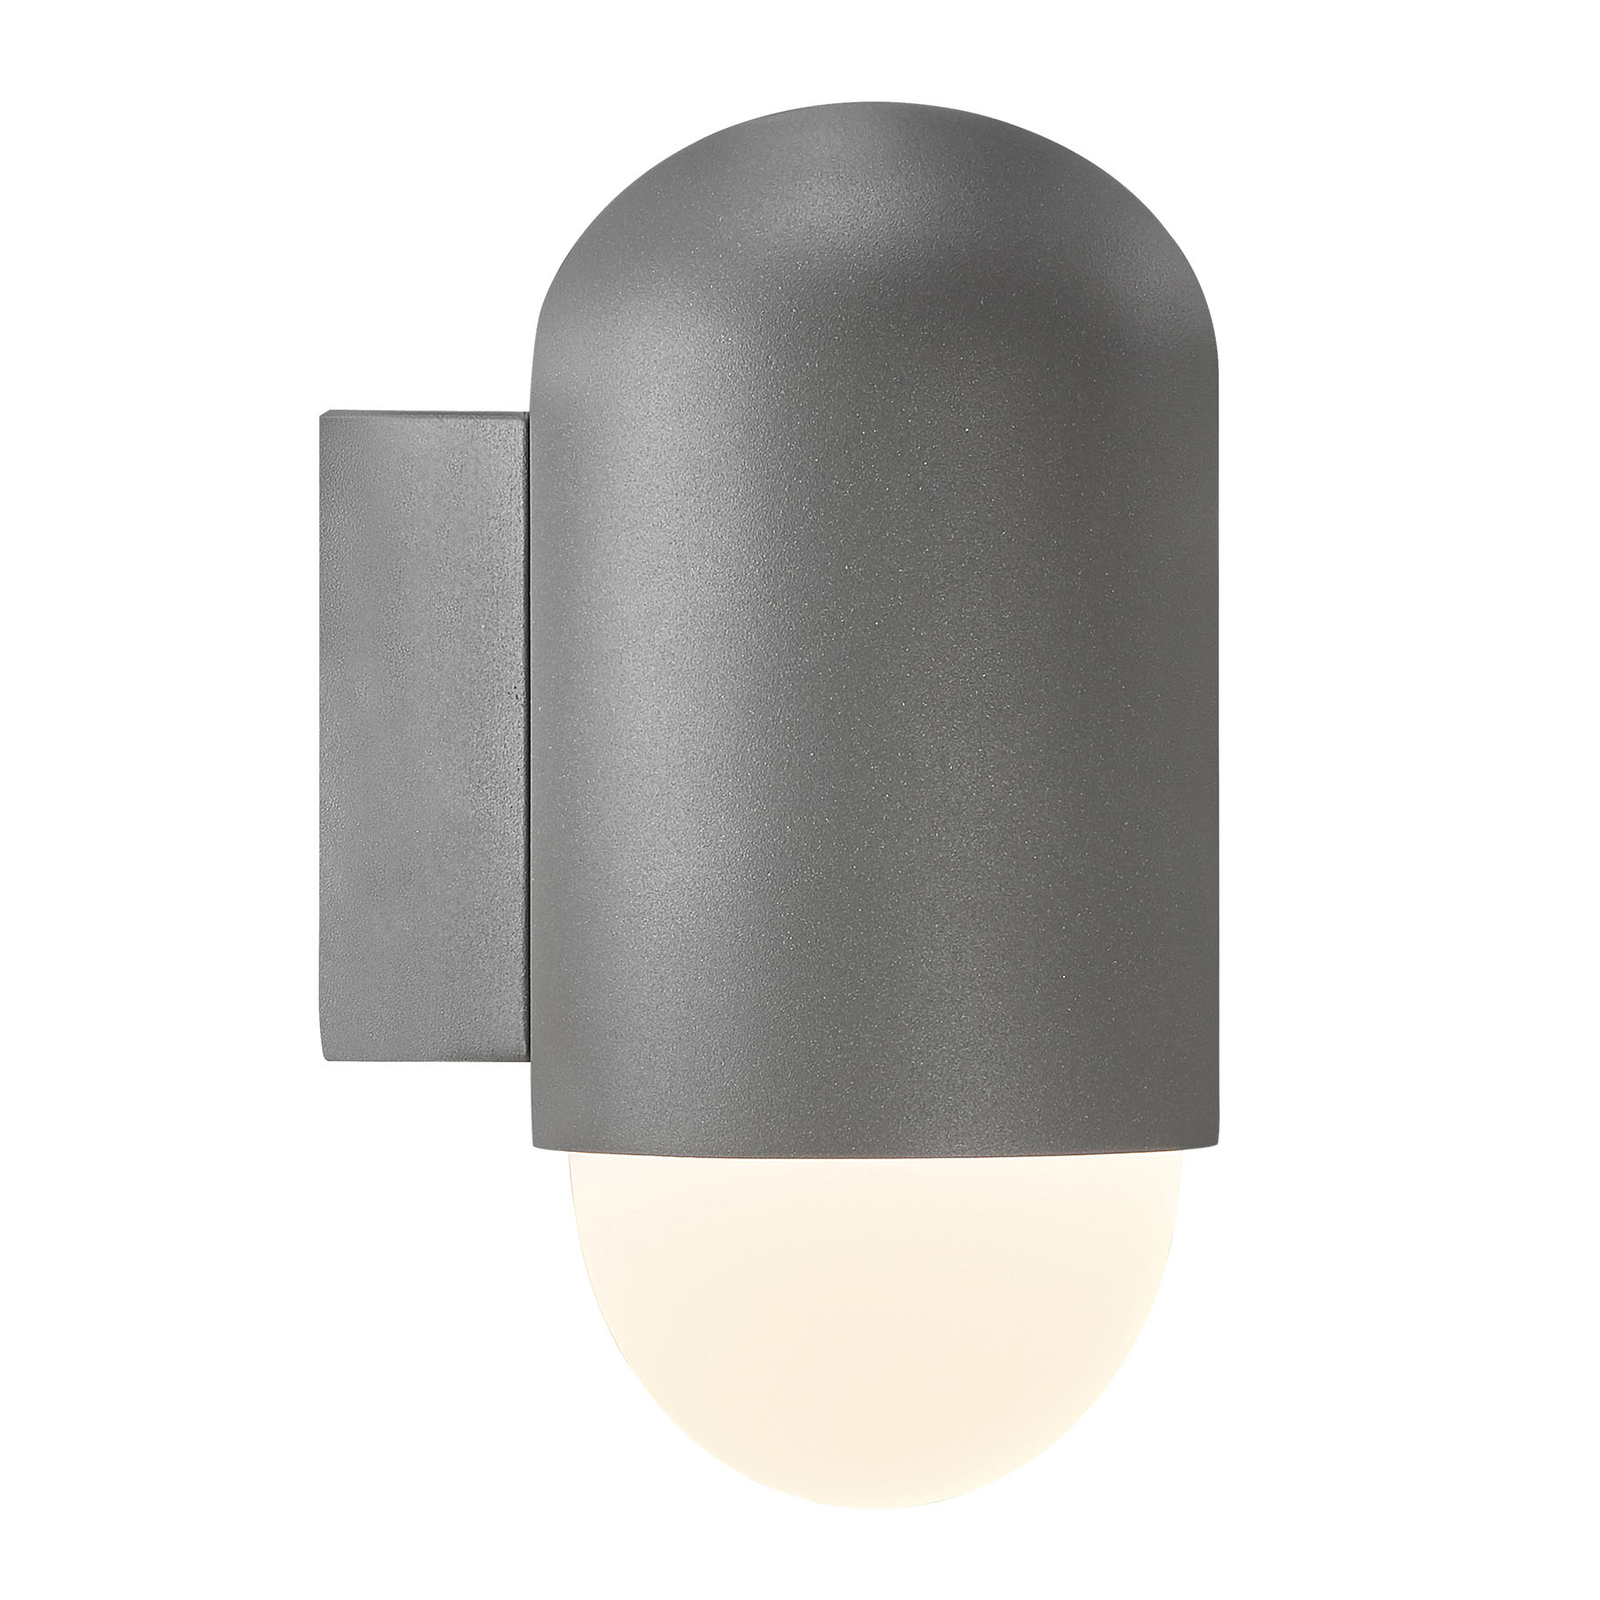 Außenwandlampe Heka, anthrazitgrau, Aluminium, Höhe 21,6 cm